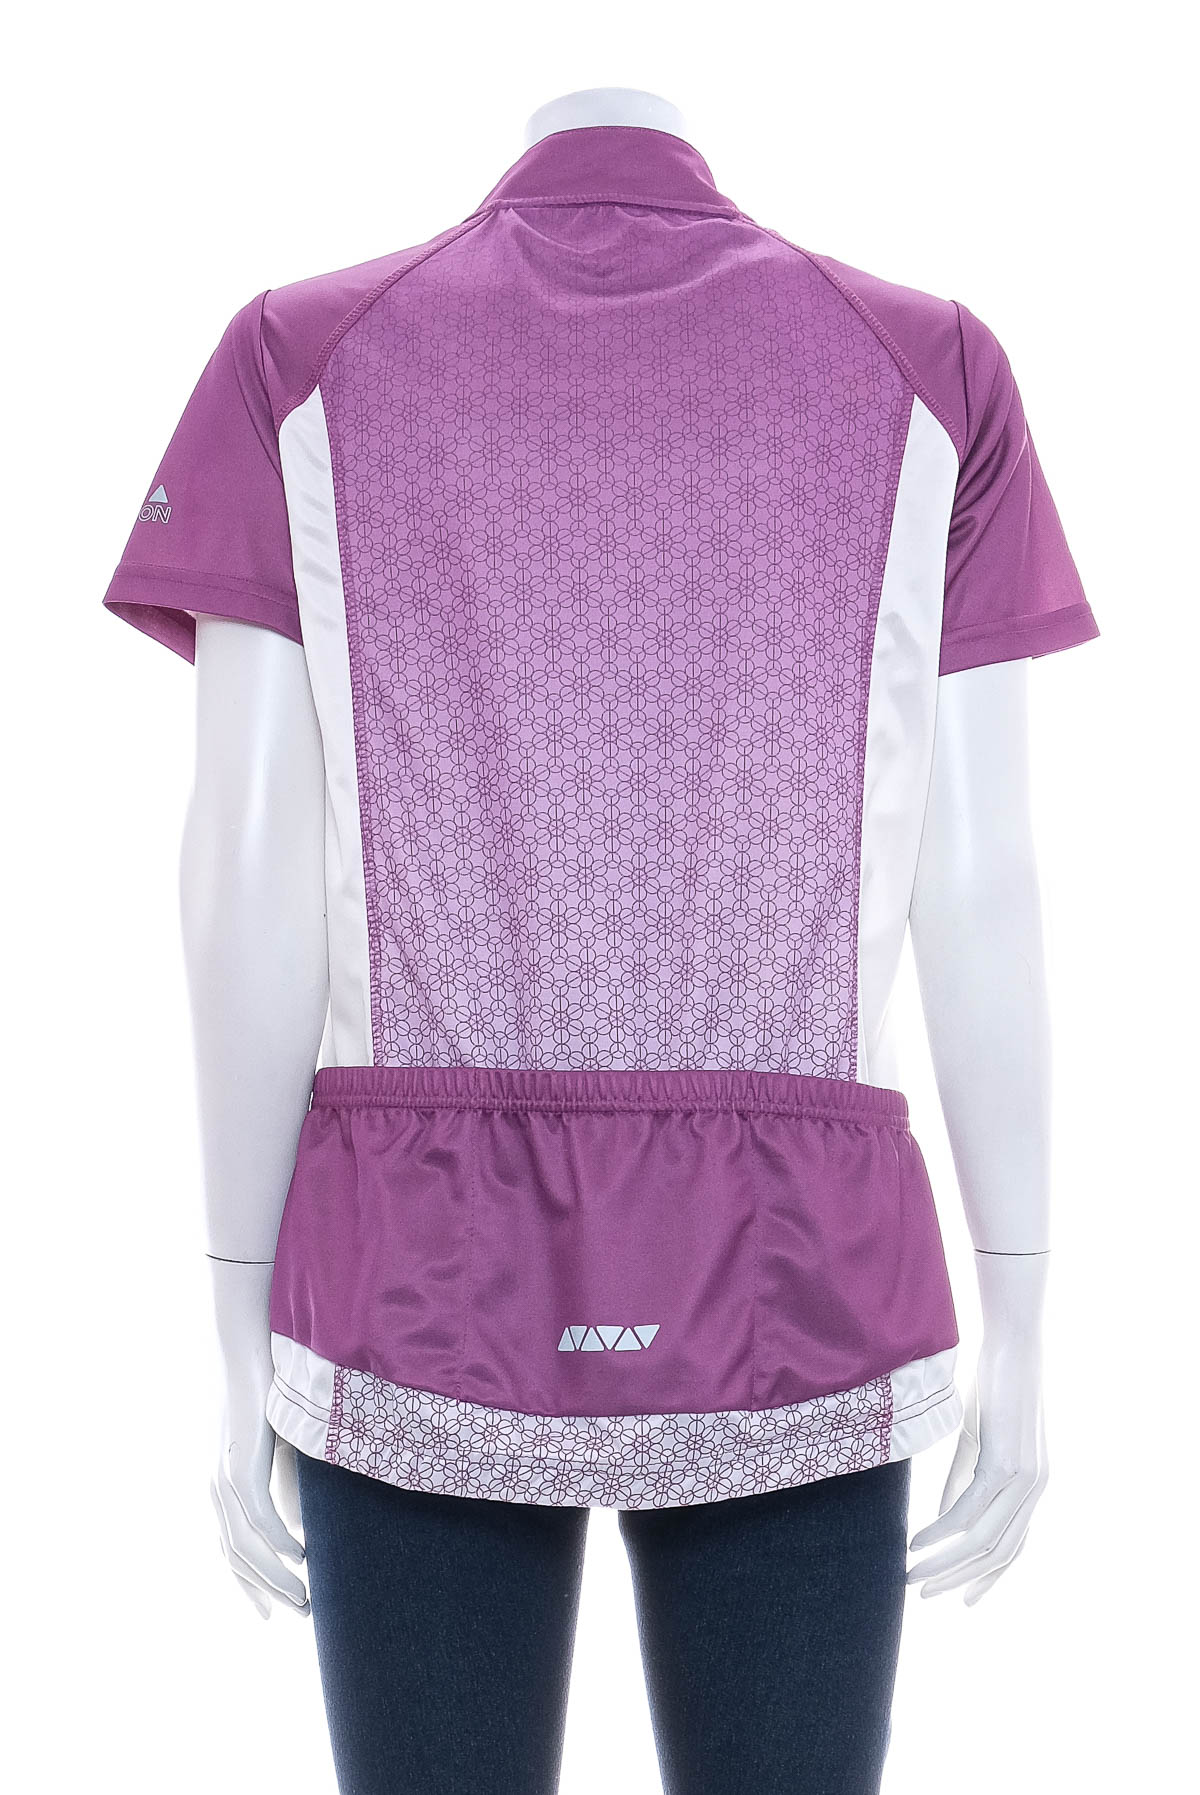 Women's t-shirt for cycling - Crivit - 1